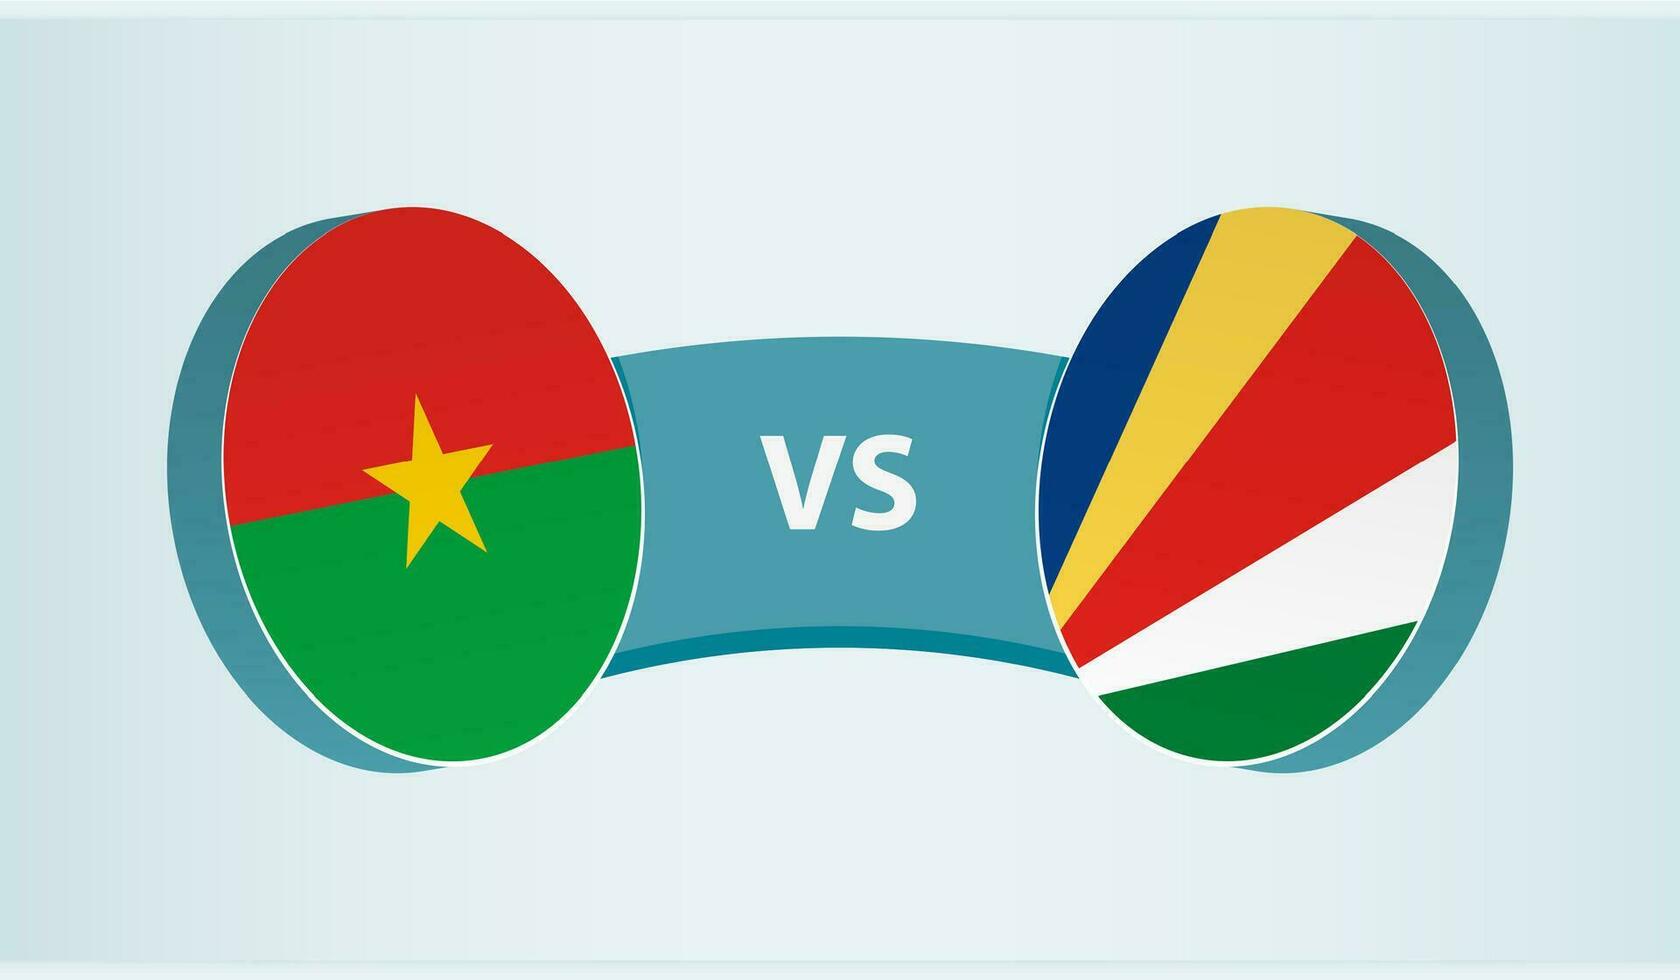 burkina faso versus Seychelles, equipe Esportes concorrência conceito. vetor